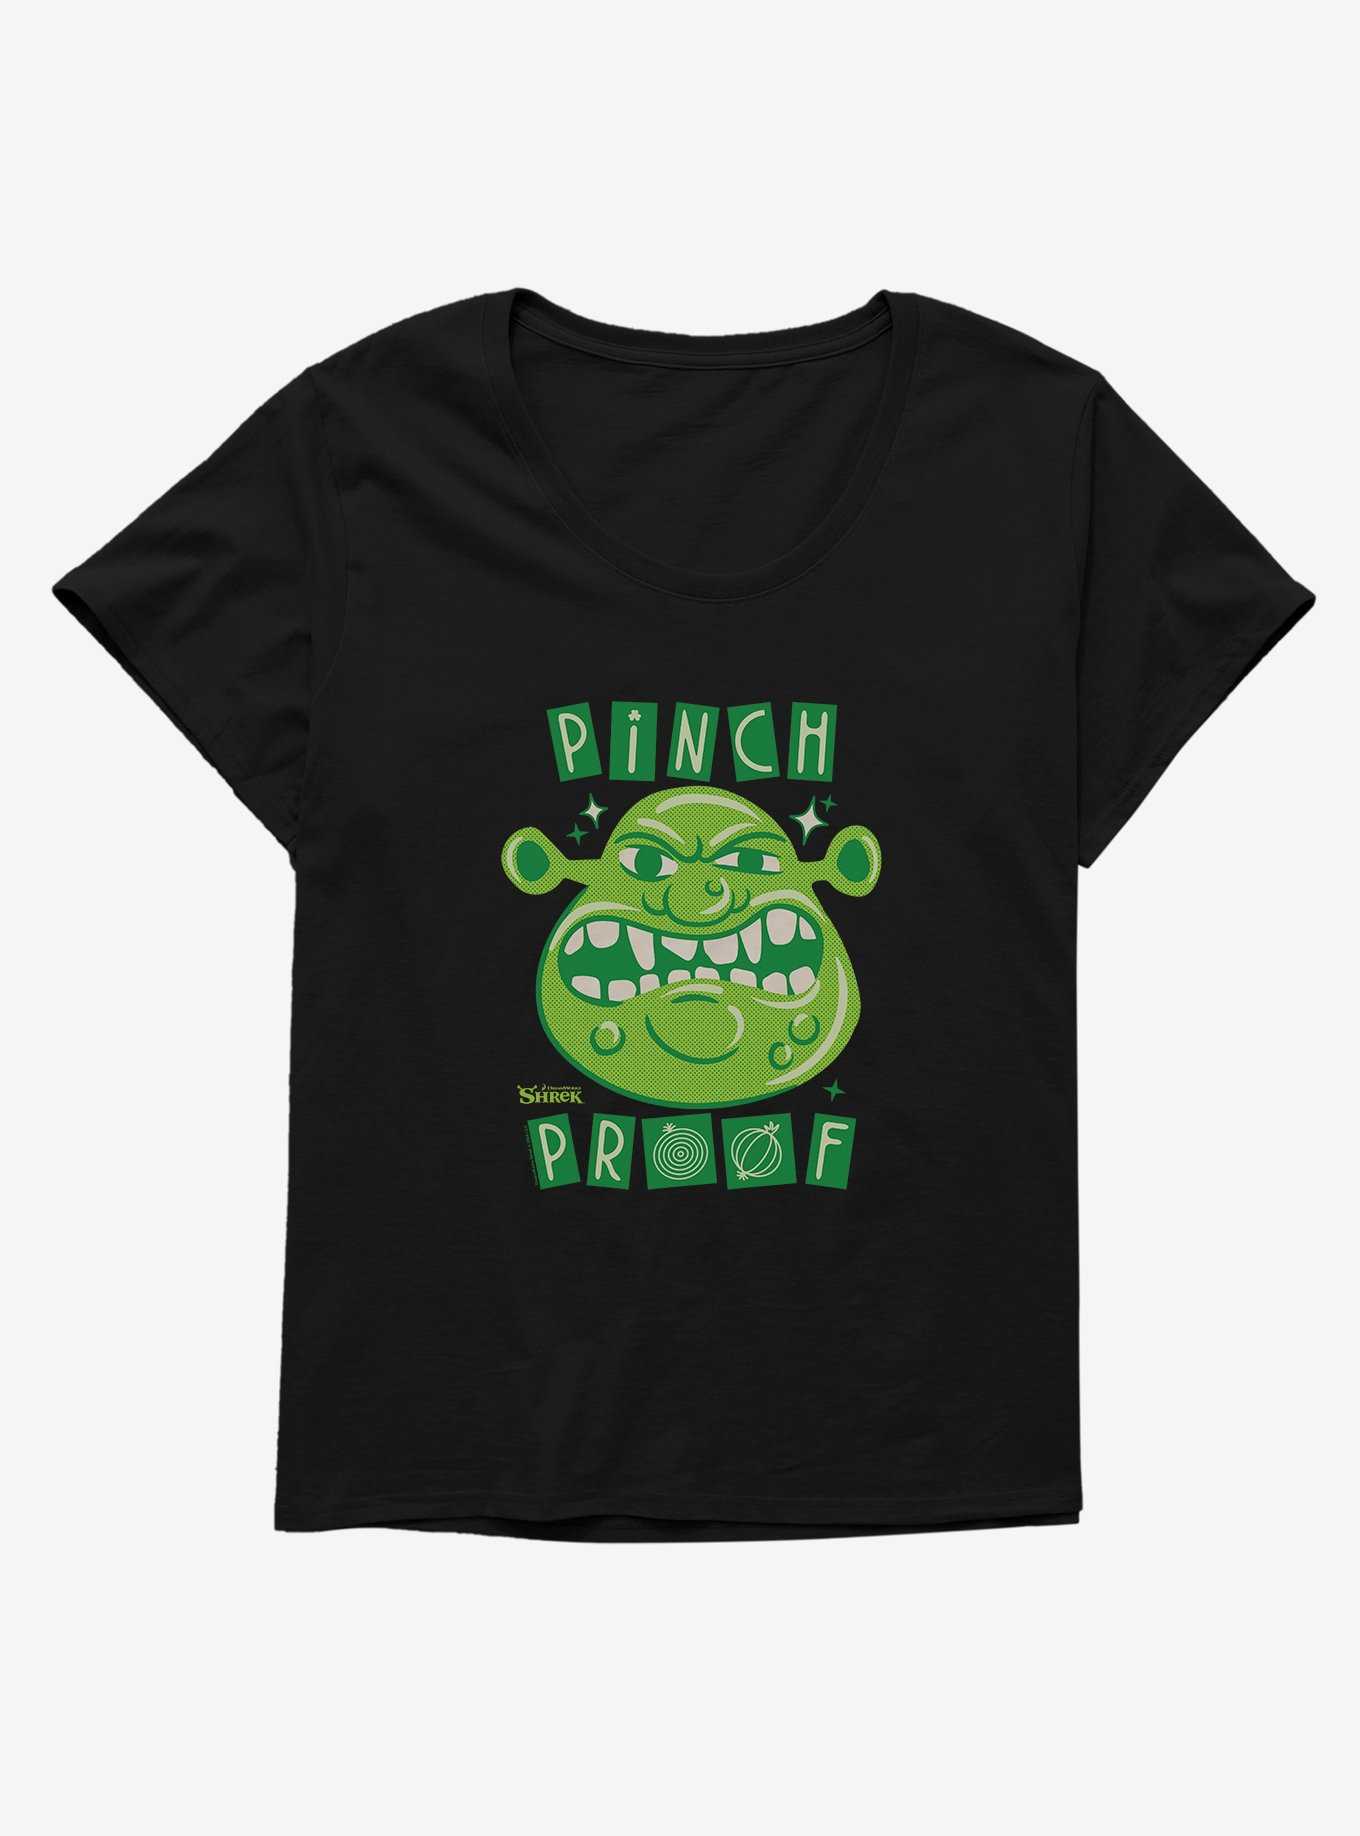 Shrek Pinch Proof Girls T-Shirt Plus Size, , hi-res